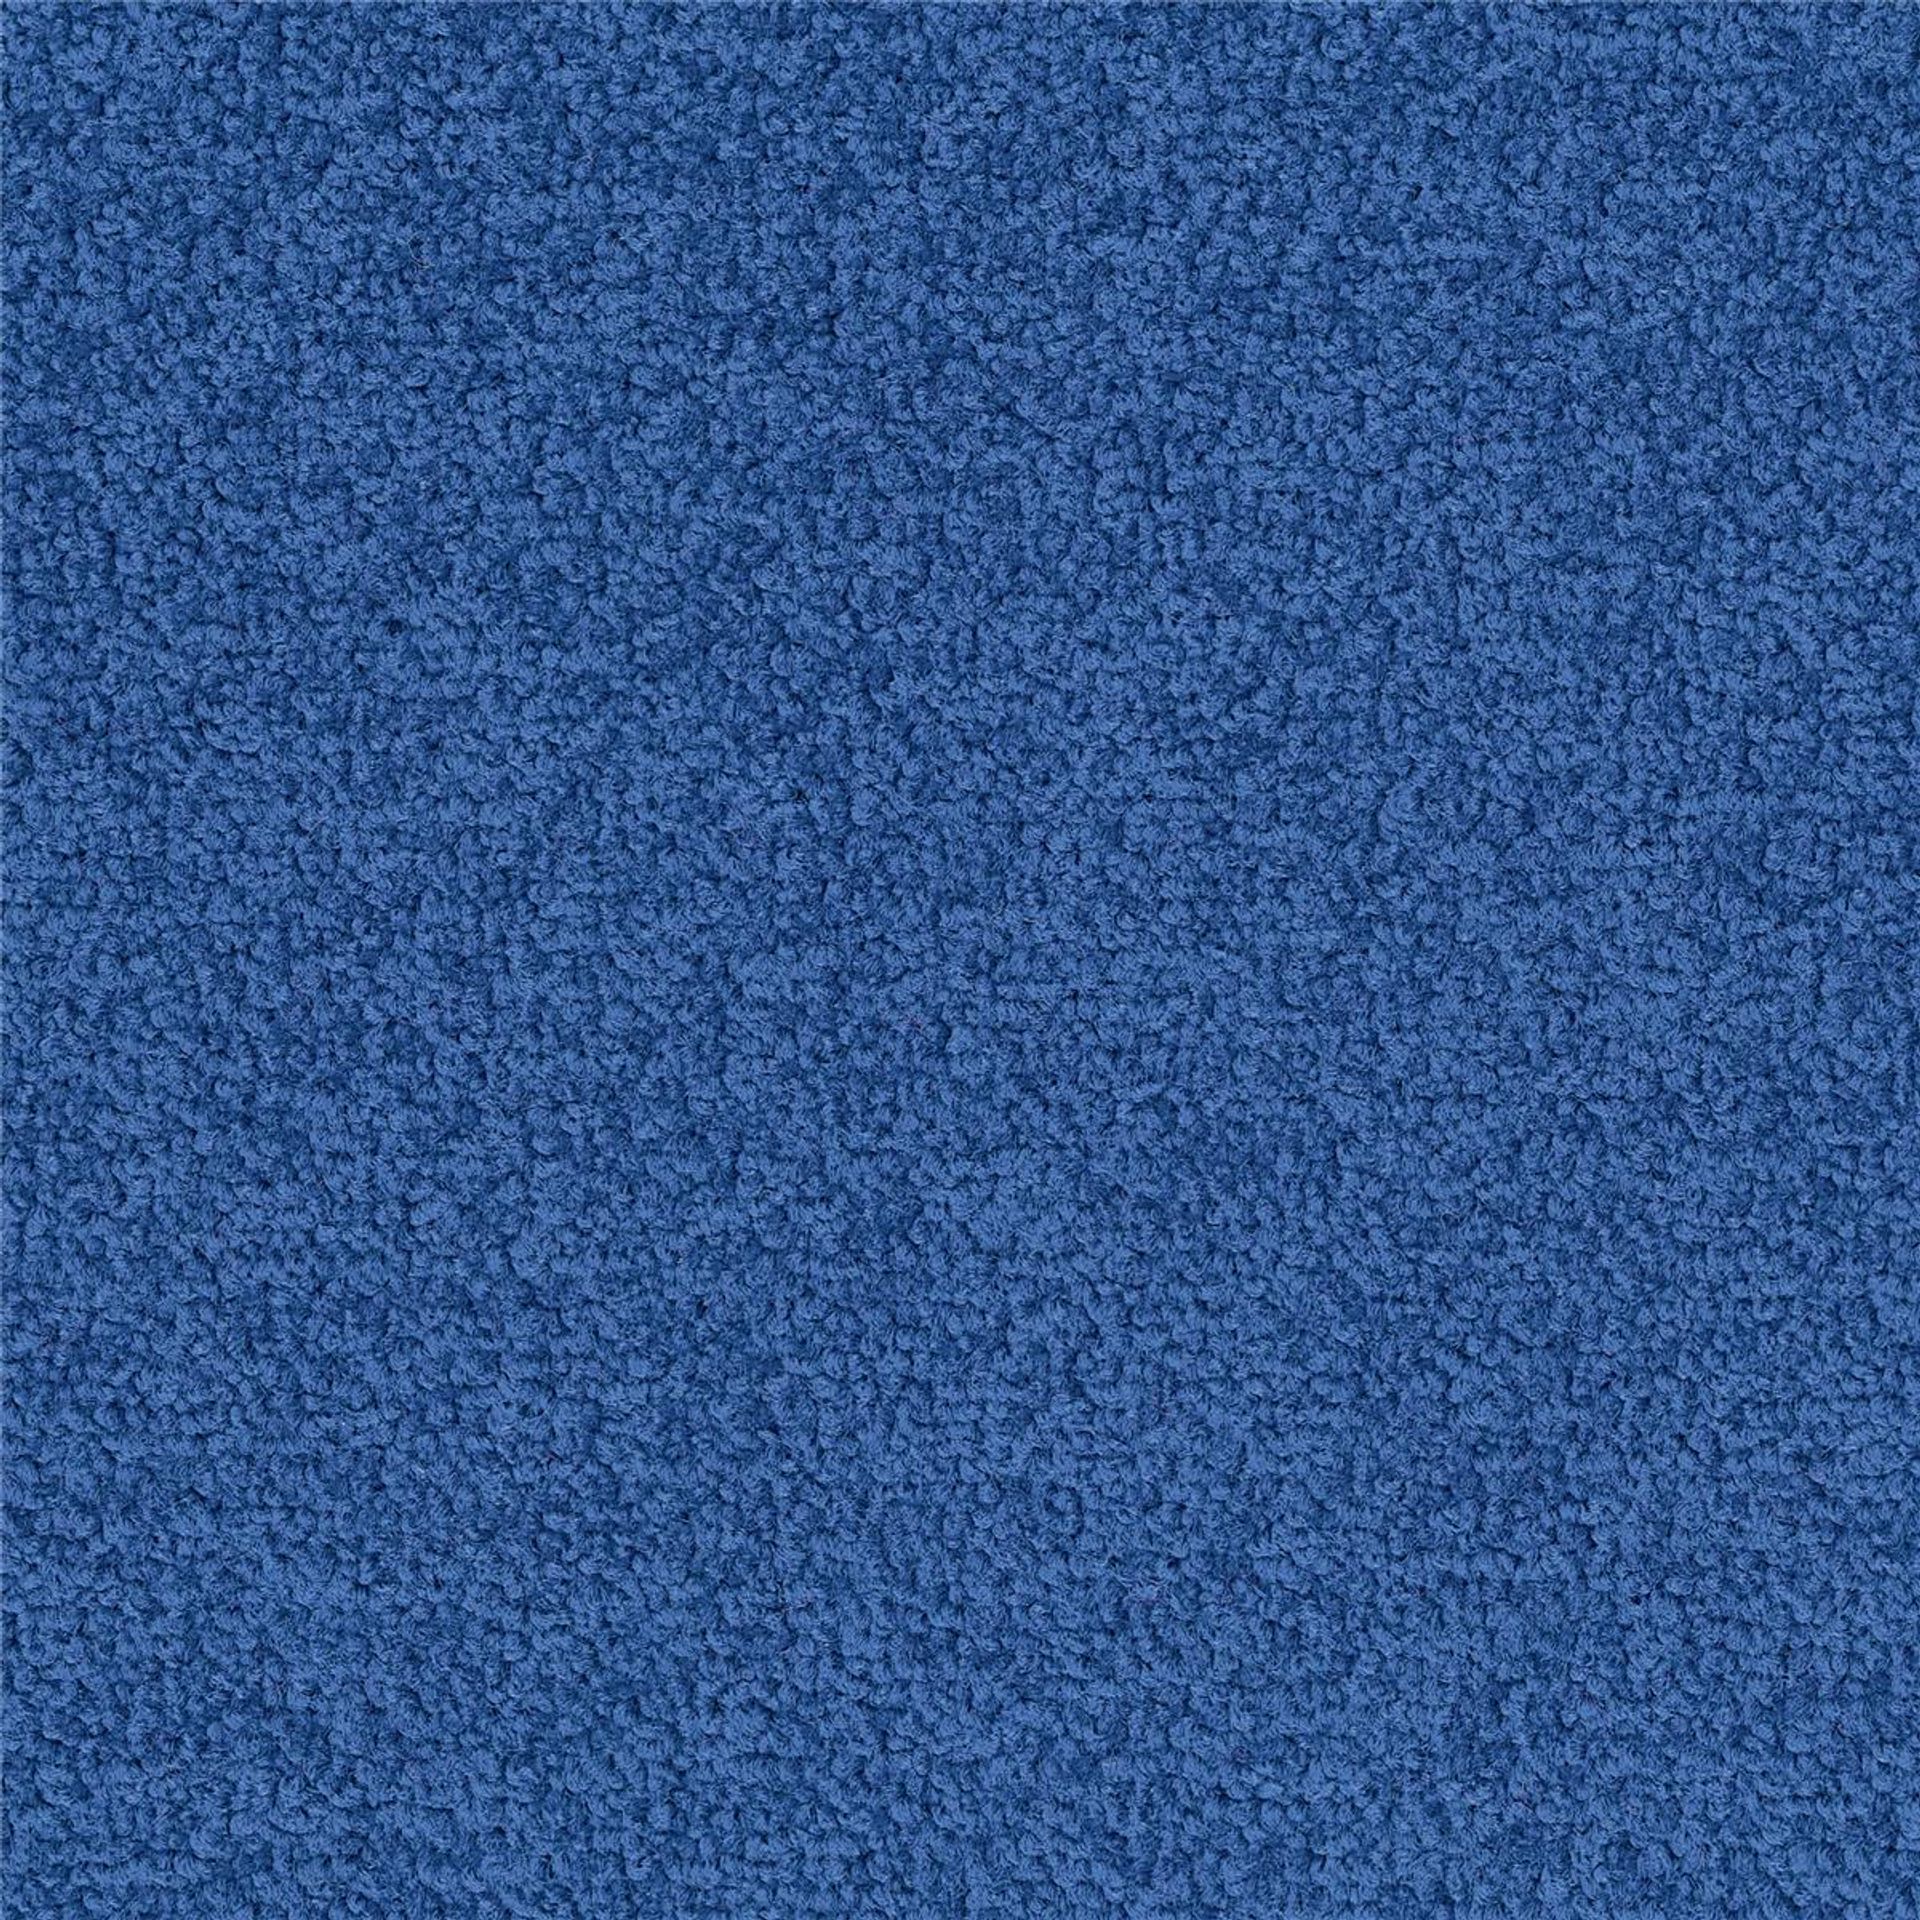 Teppichfliesen 50 x 50 cm Velours Palatino A072 8412 Blau Allover